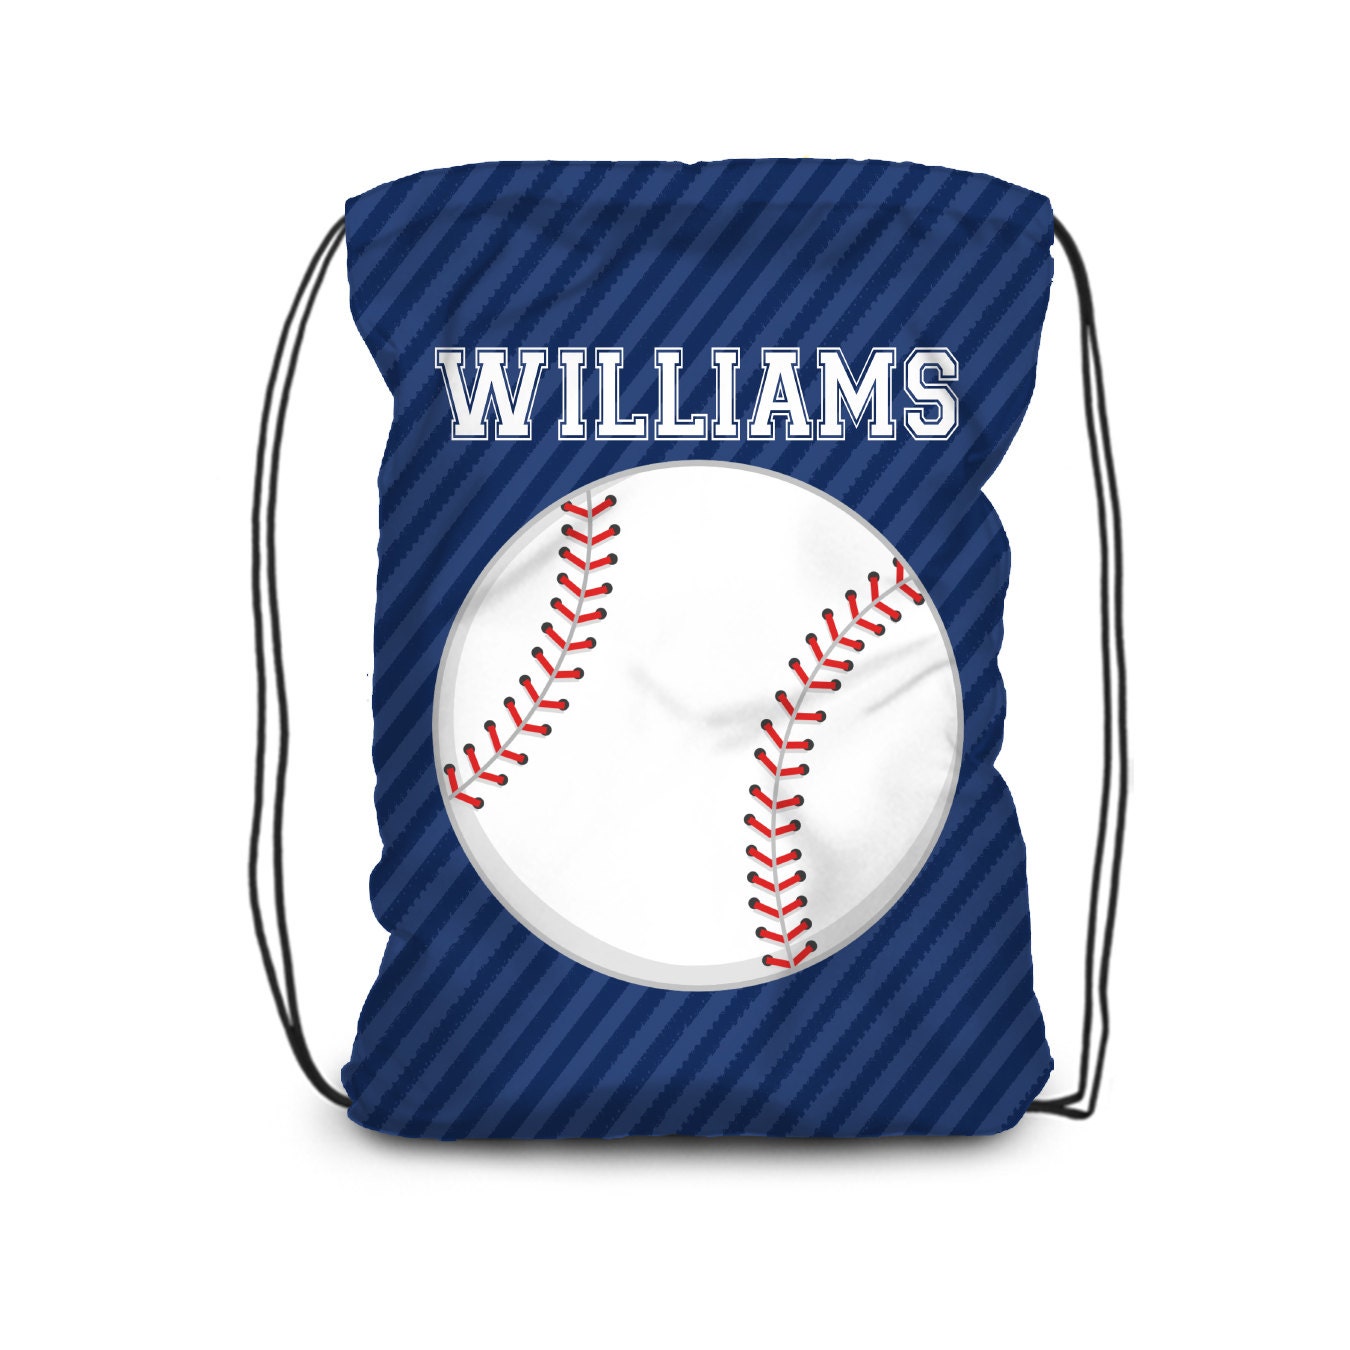 2 Down Baseball Logo Draw String Bag